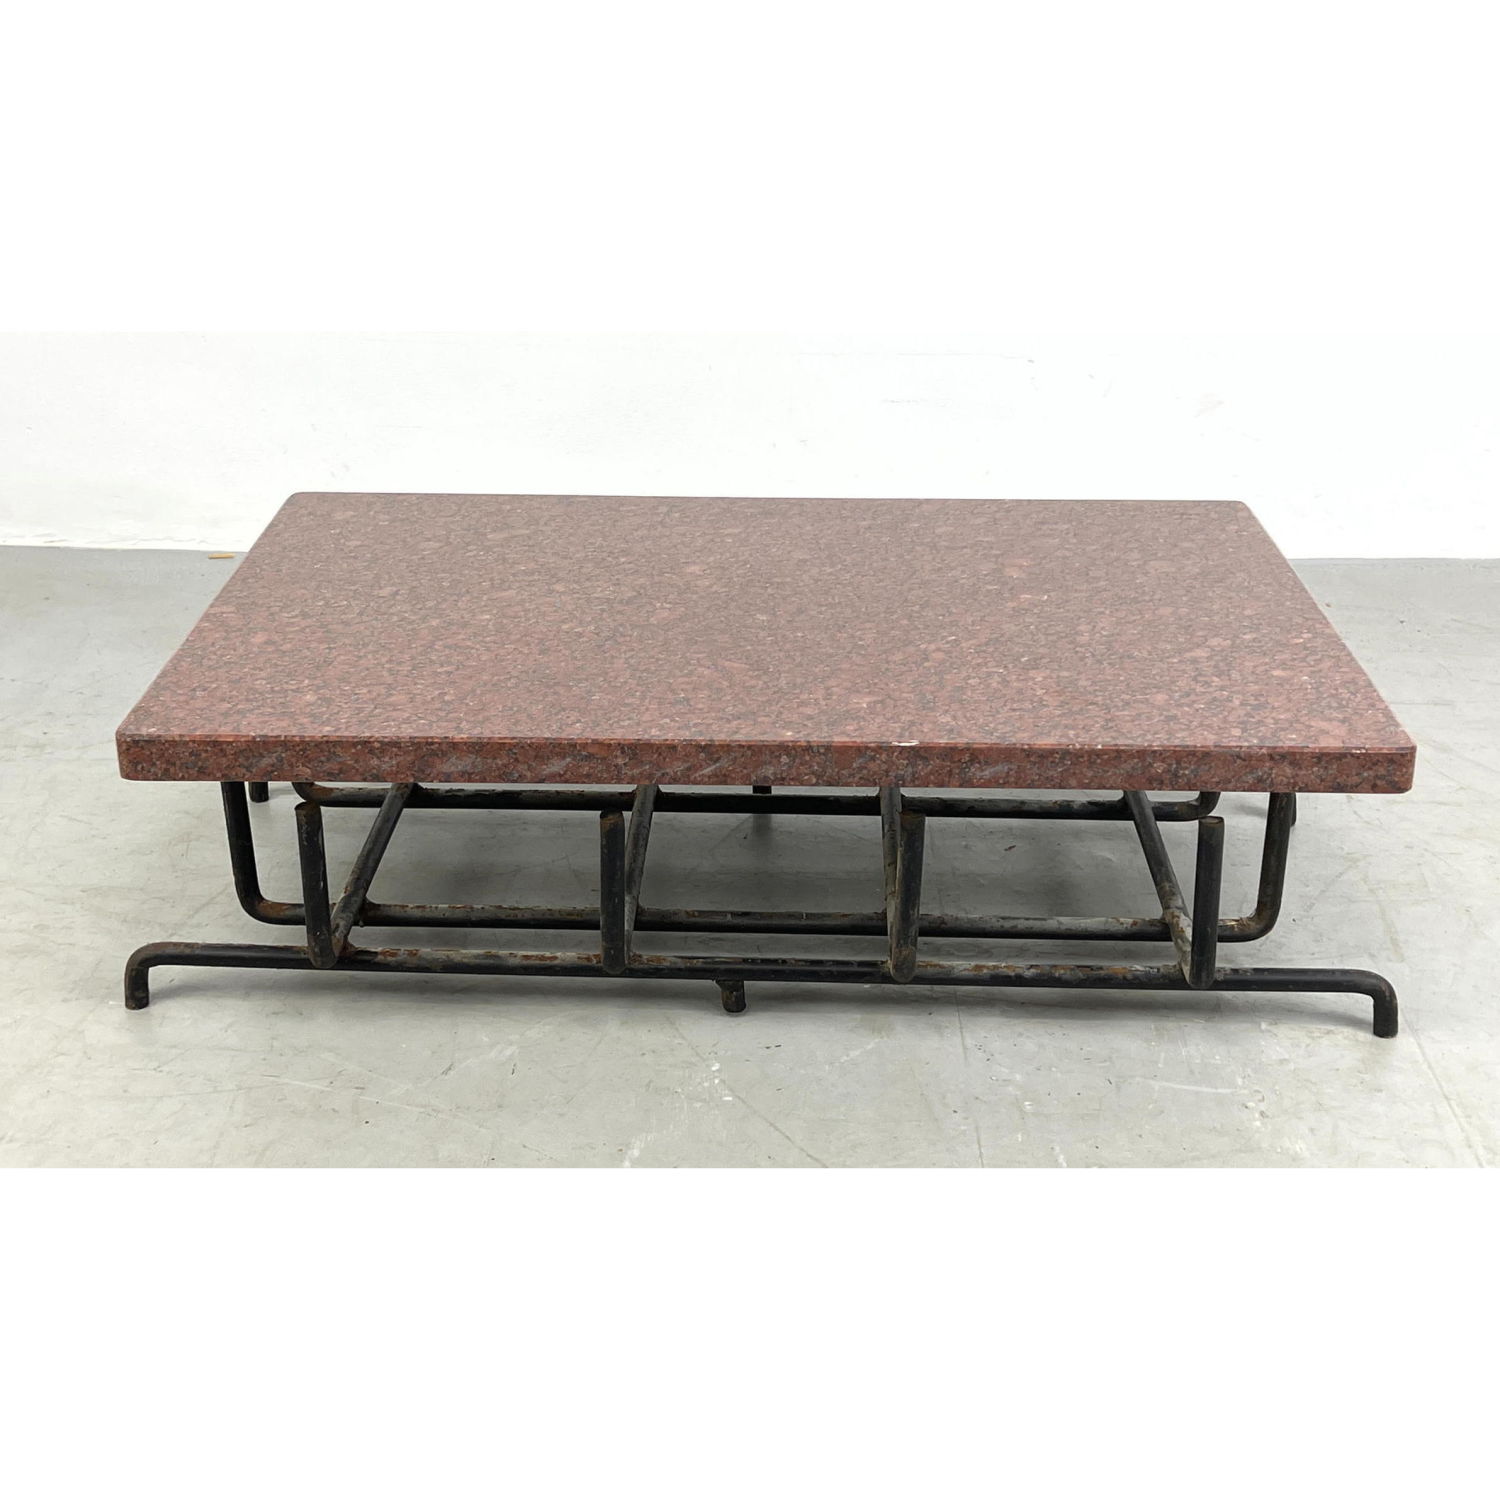 Low Granite Top Garden Table with 2ba10e